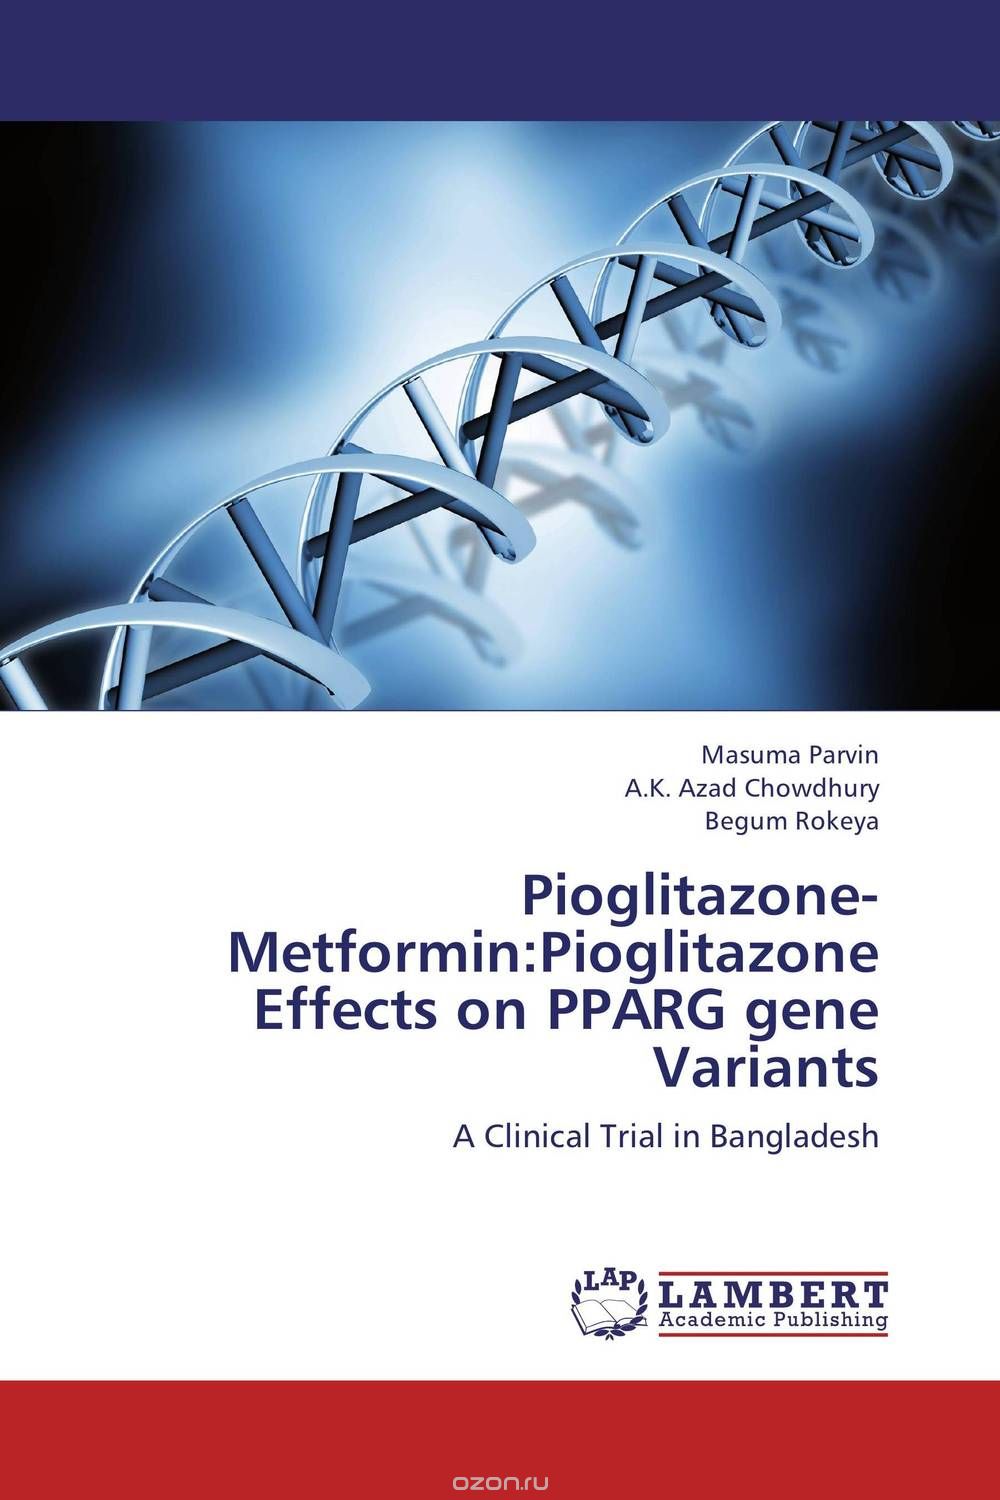 Скачать книгу "Pioglitazone-Metformin:Pioglitazone Effects on PPARG gene Variants"